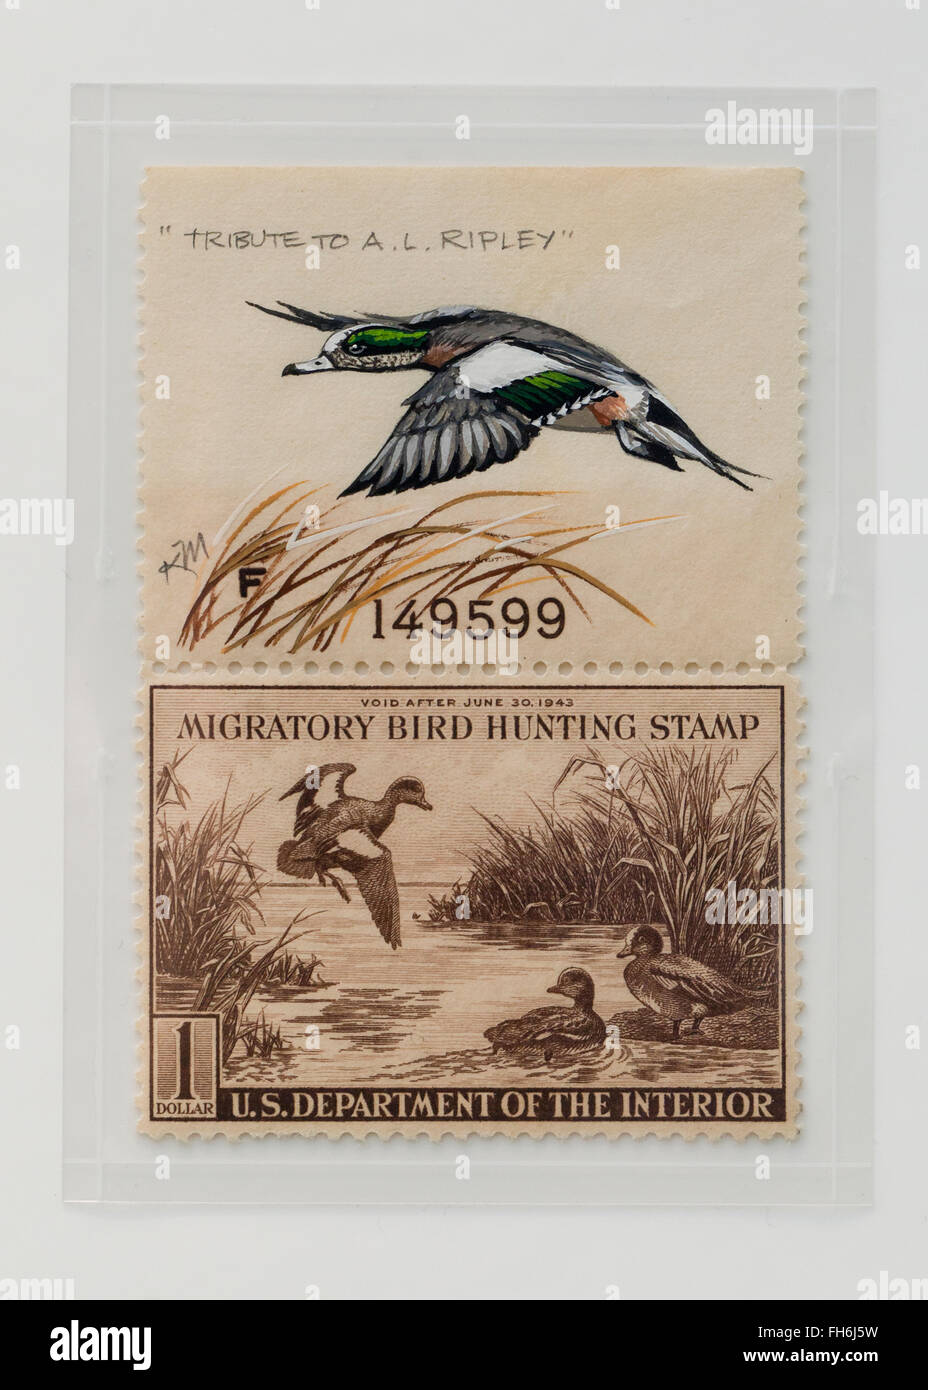 Vintage Migratory Bird Hunting Stamp $1 Baldtapes stamp, circa 1942 - USA Stock Photo